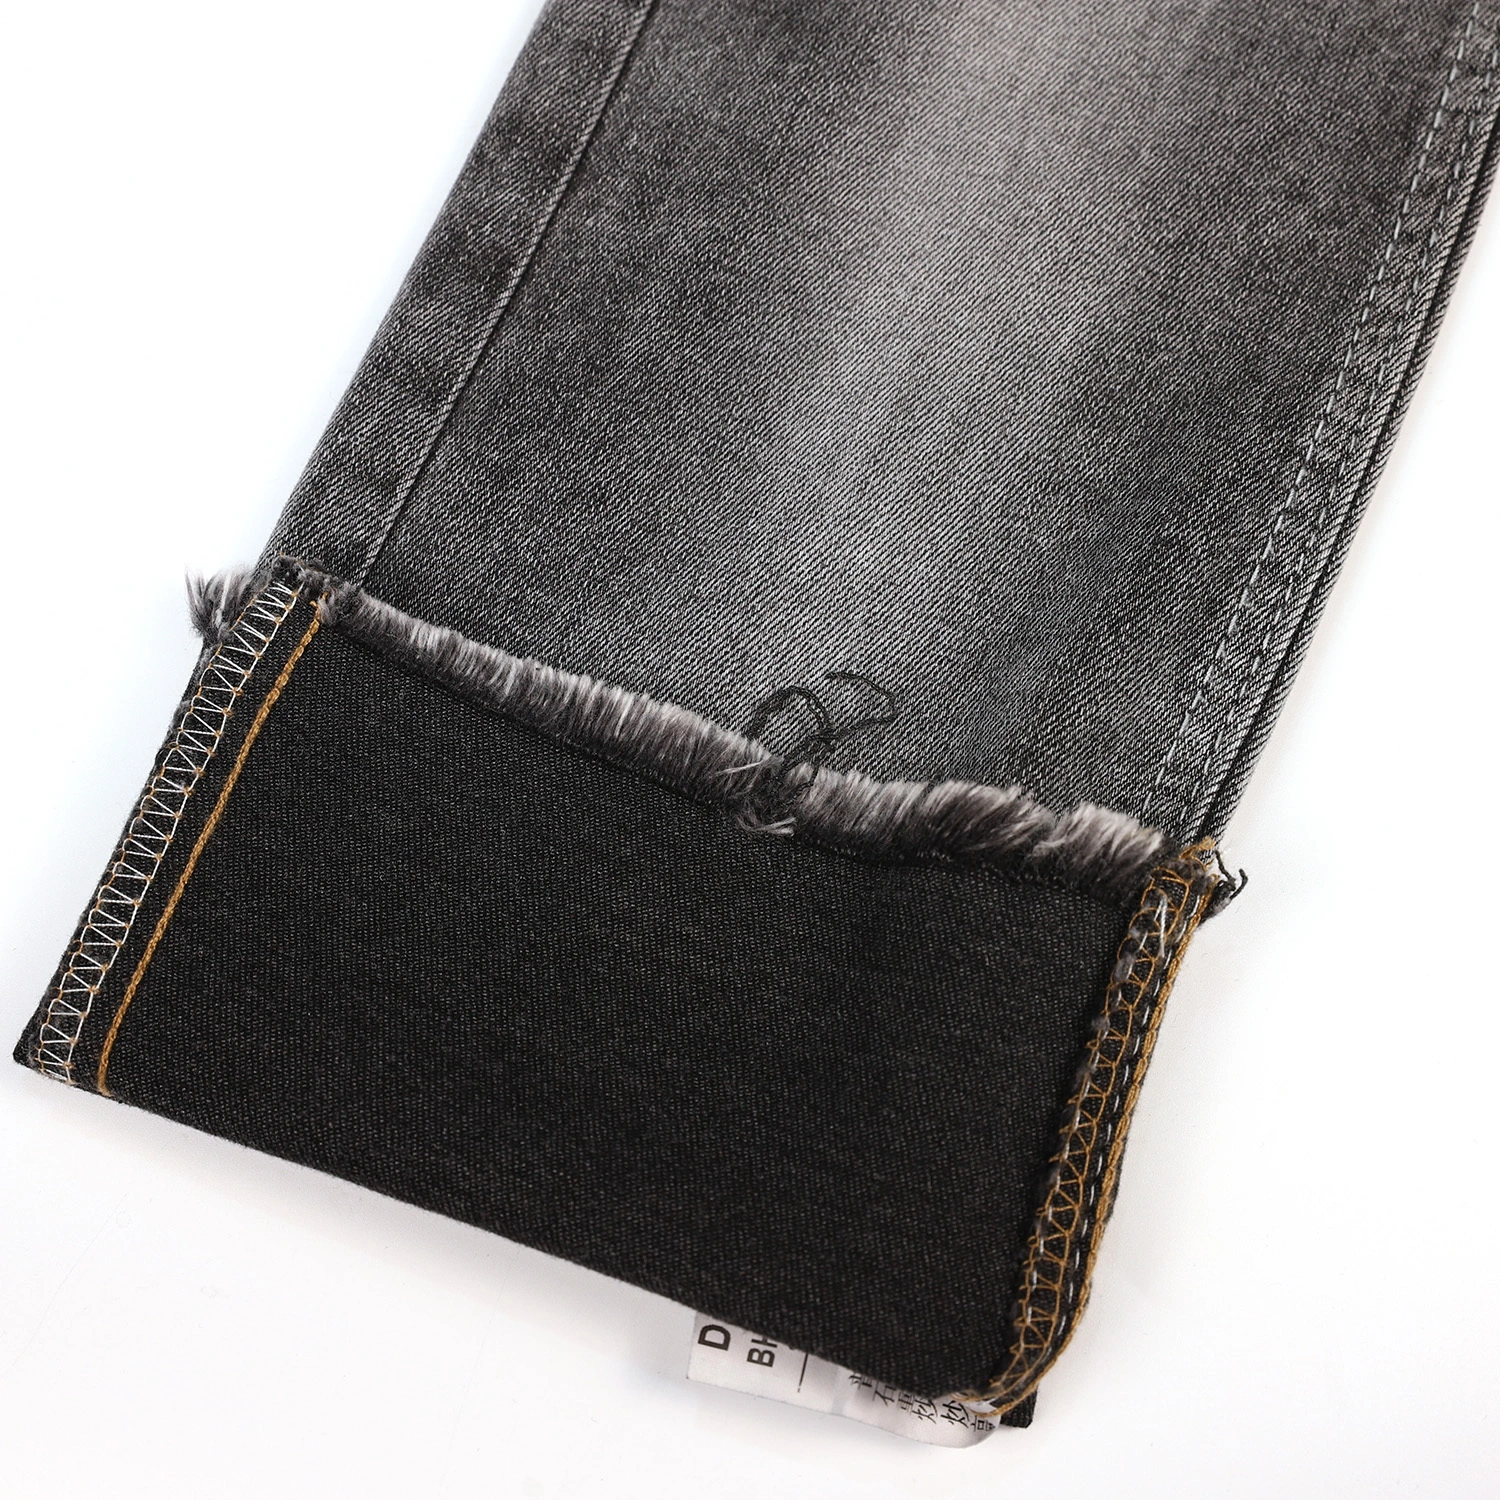 199B-16 10+10*14 Wholesale Black Color Supersoft Cotton Stretch Denim Fabric For Jeans 7